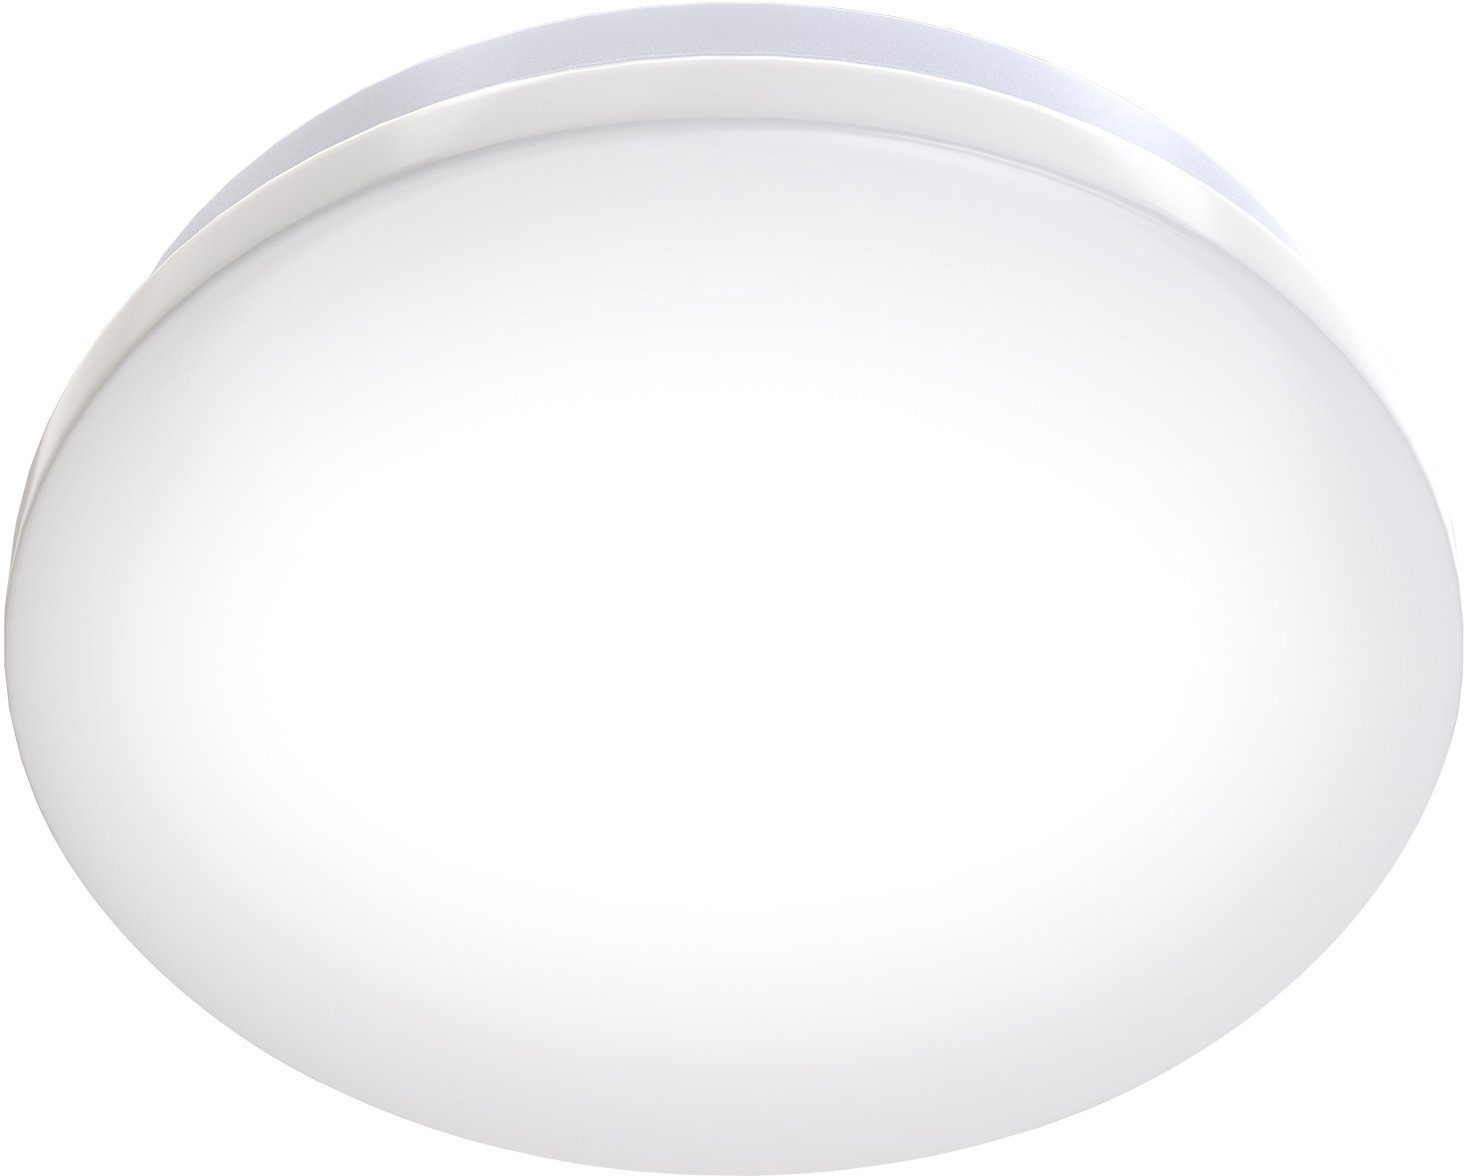 LED flach, integriert, LED 4000K, 1200lm Modul inkl. weiß Watt Bad, LED Deckenlampe, Neutralweiß, Deckenleuchte, fest 12 B.K.Licht